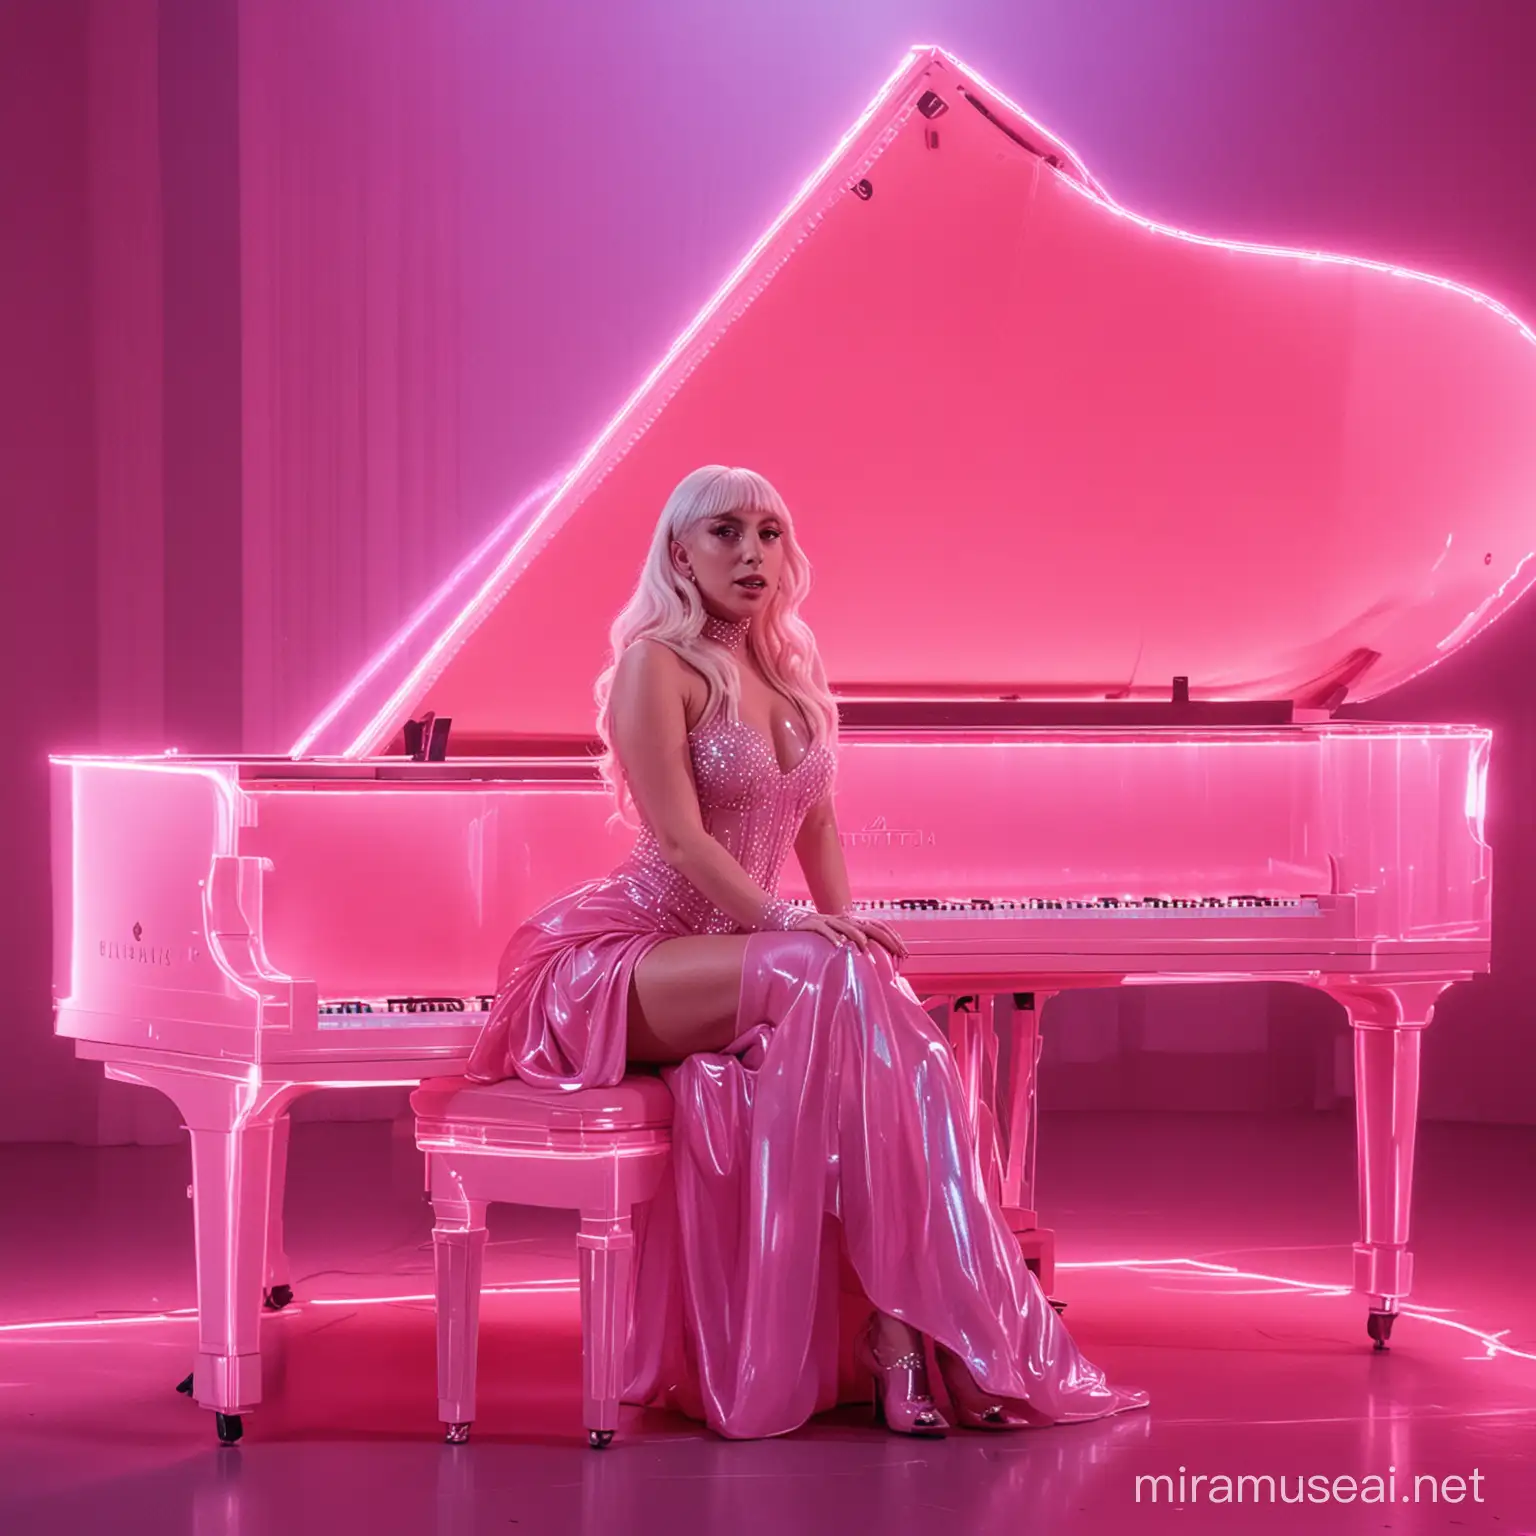 Lady gaga wearing chromatica tour costume while sitting py pink holografic semi-transparant piano